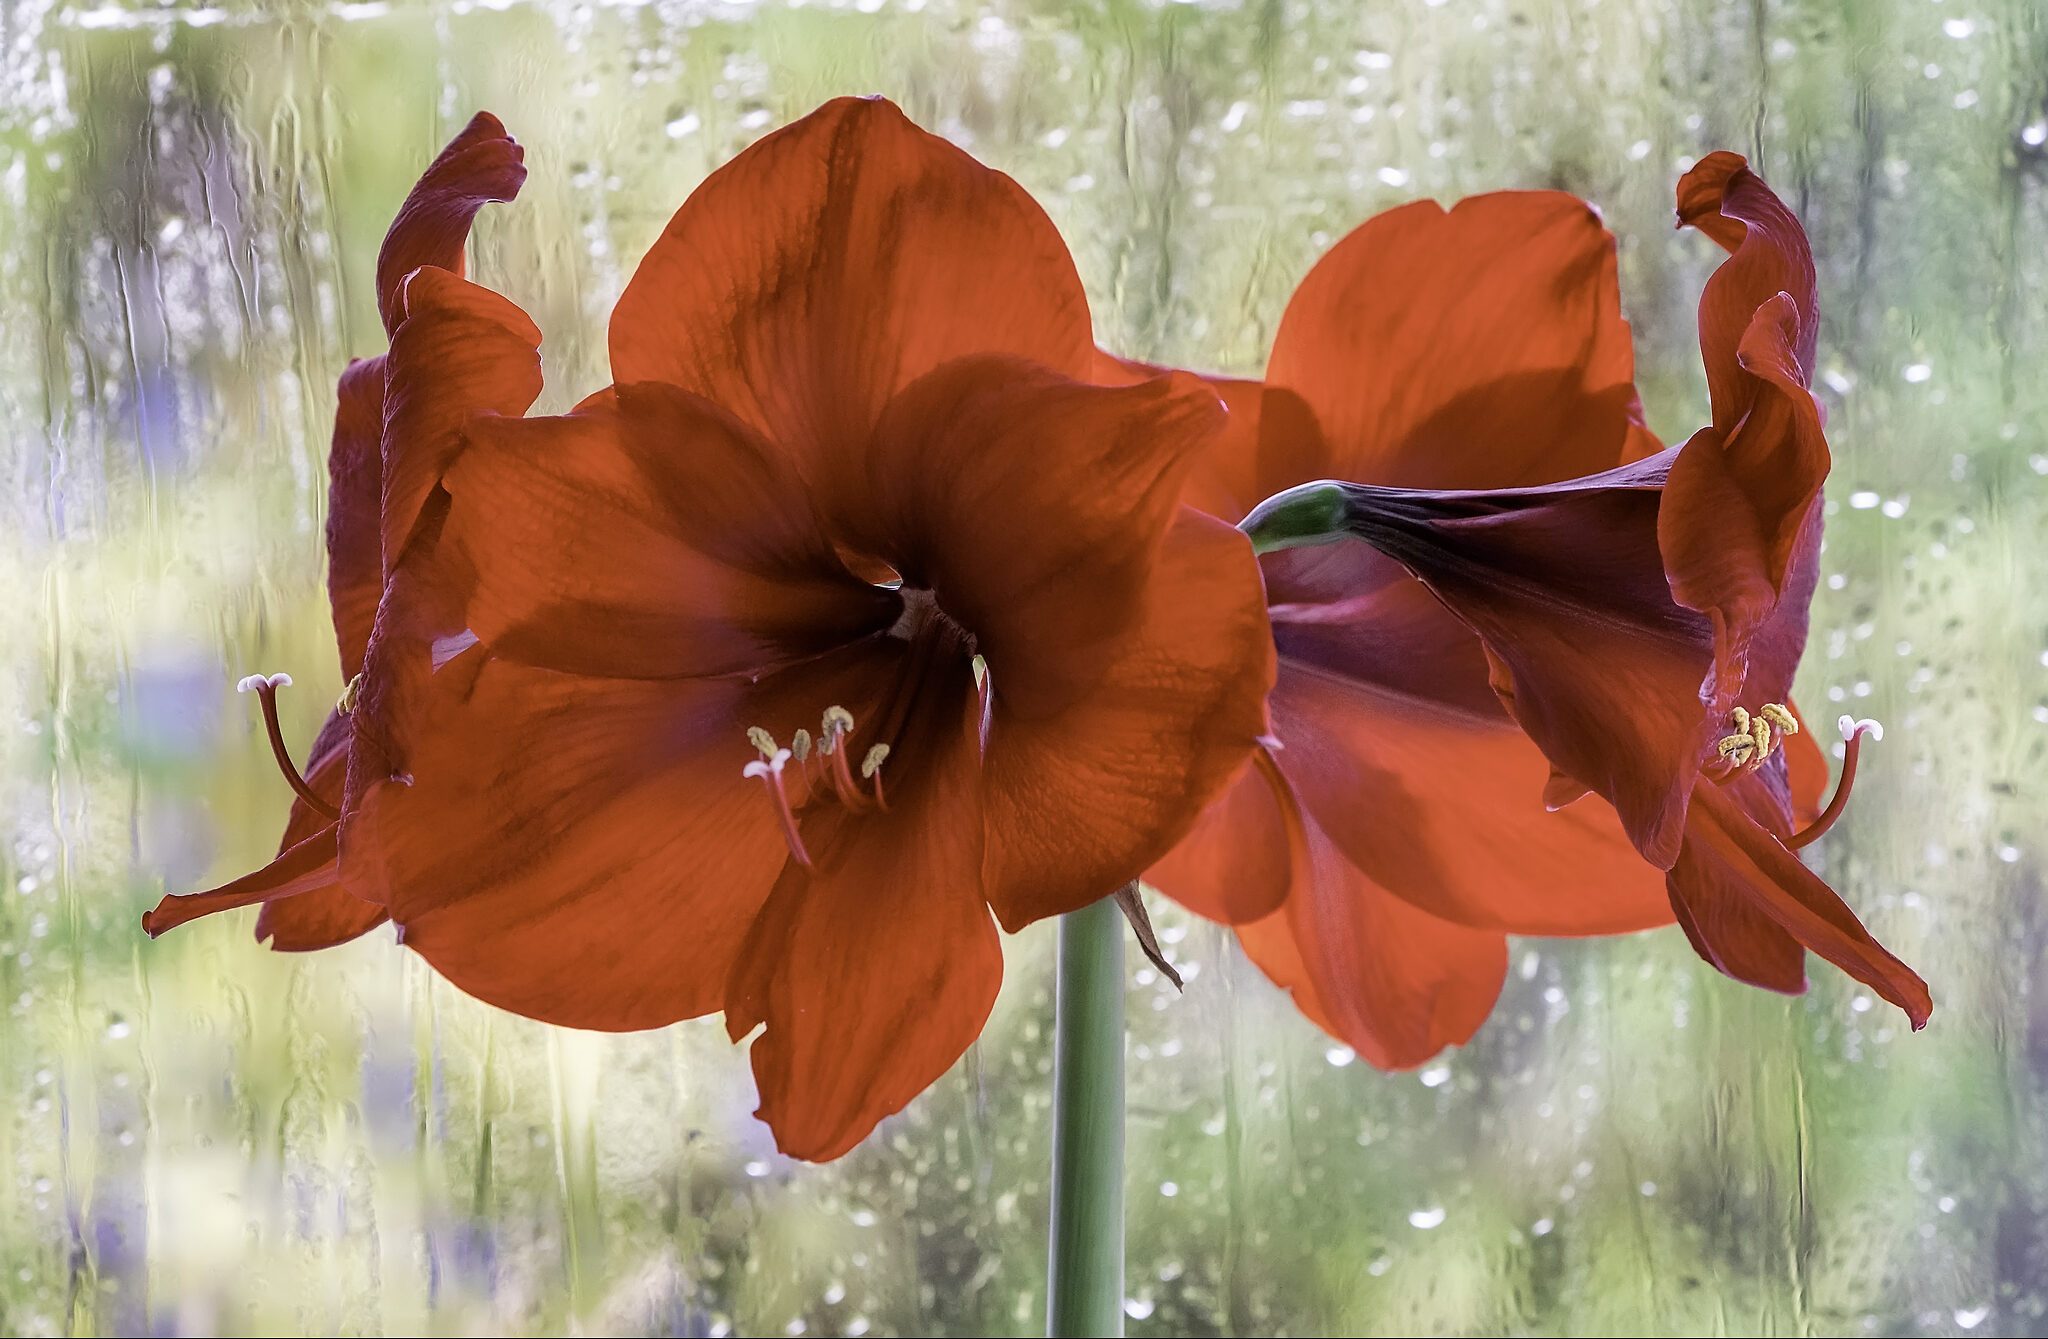  Wet Window & Amaryllis Flowers In The Rain  .jpg